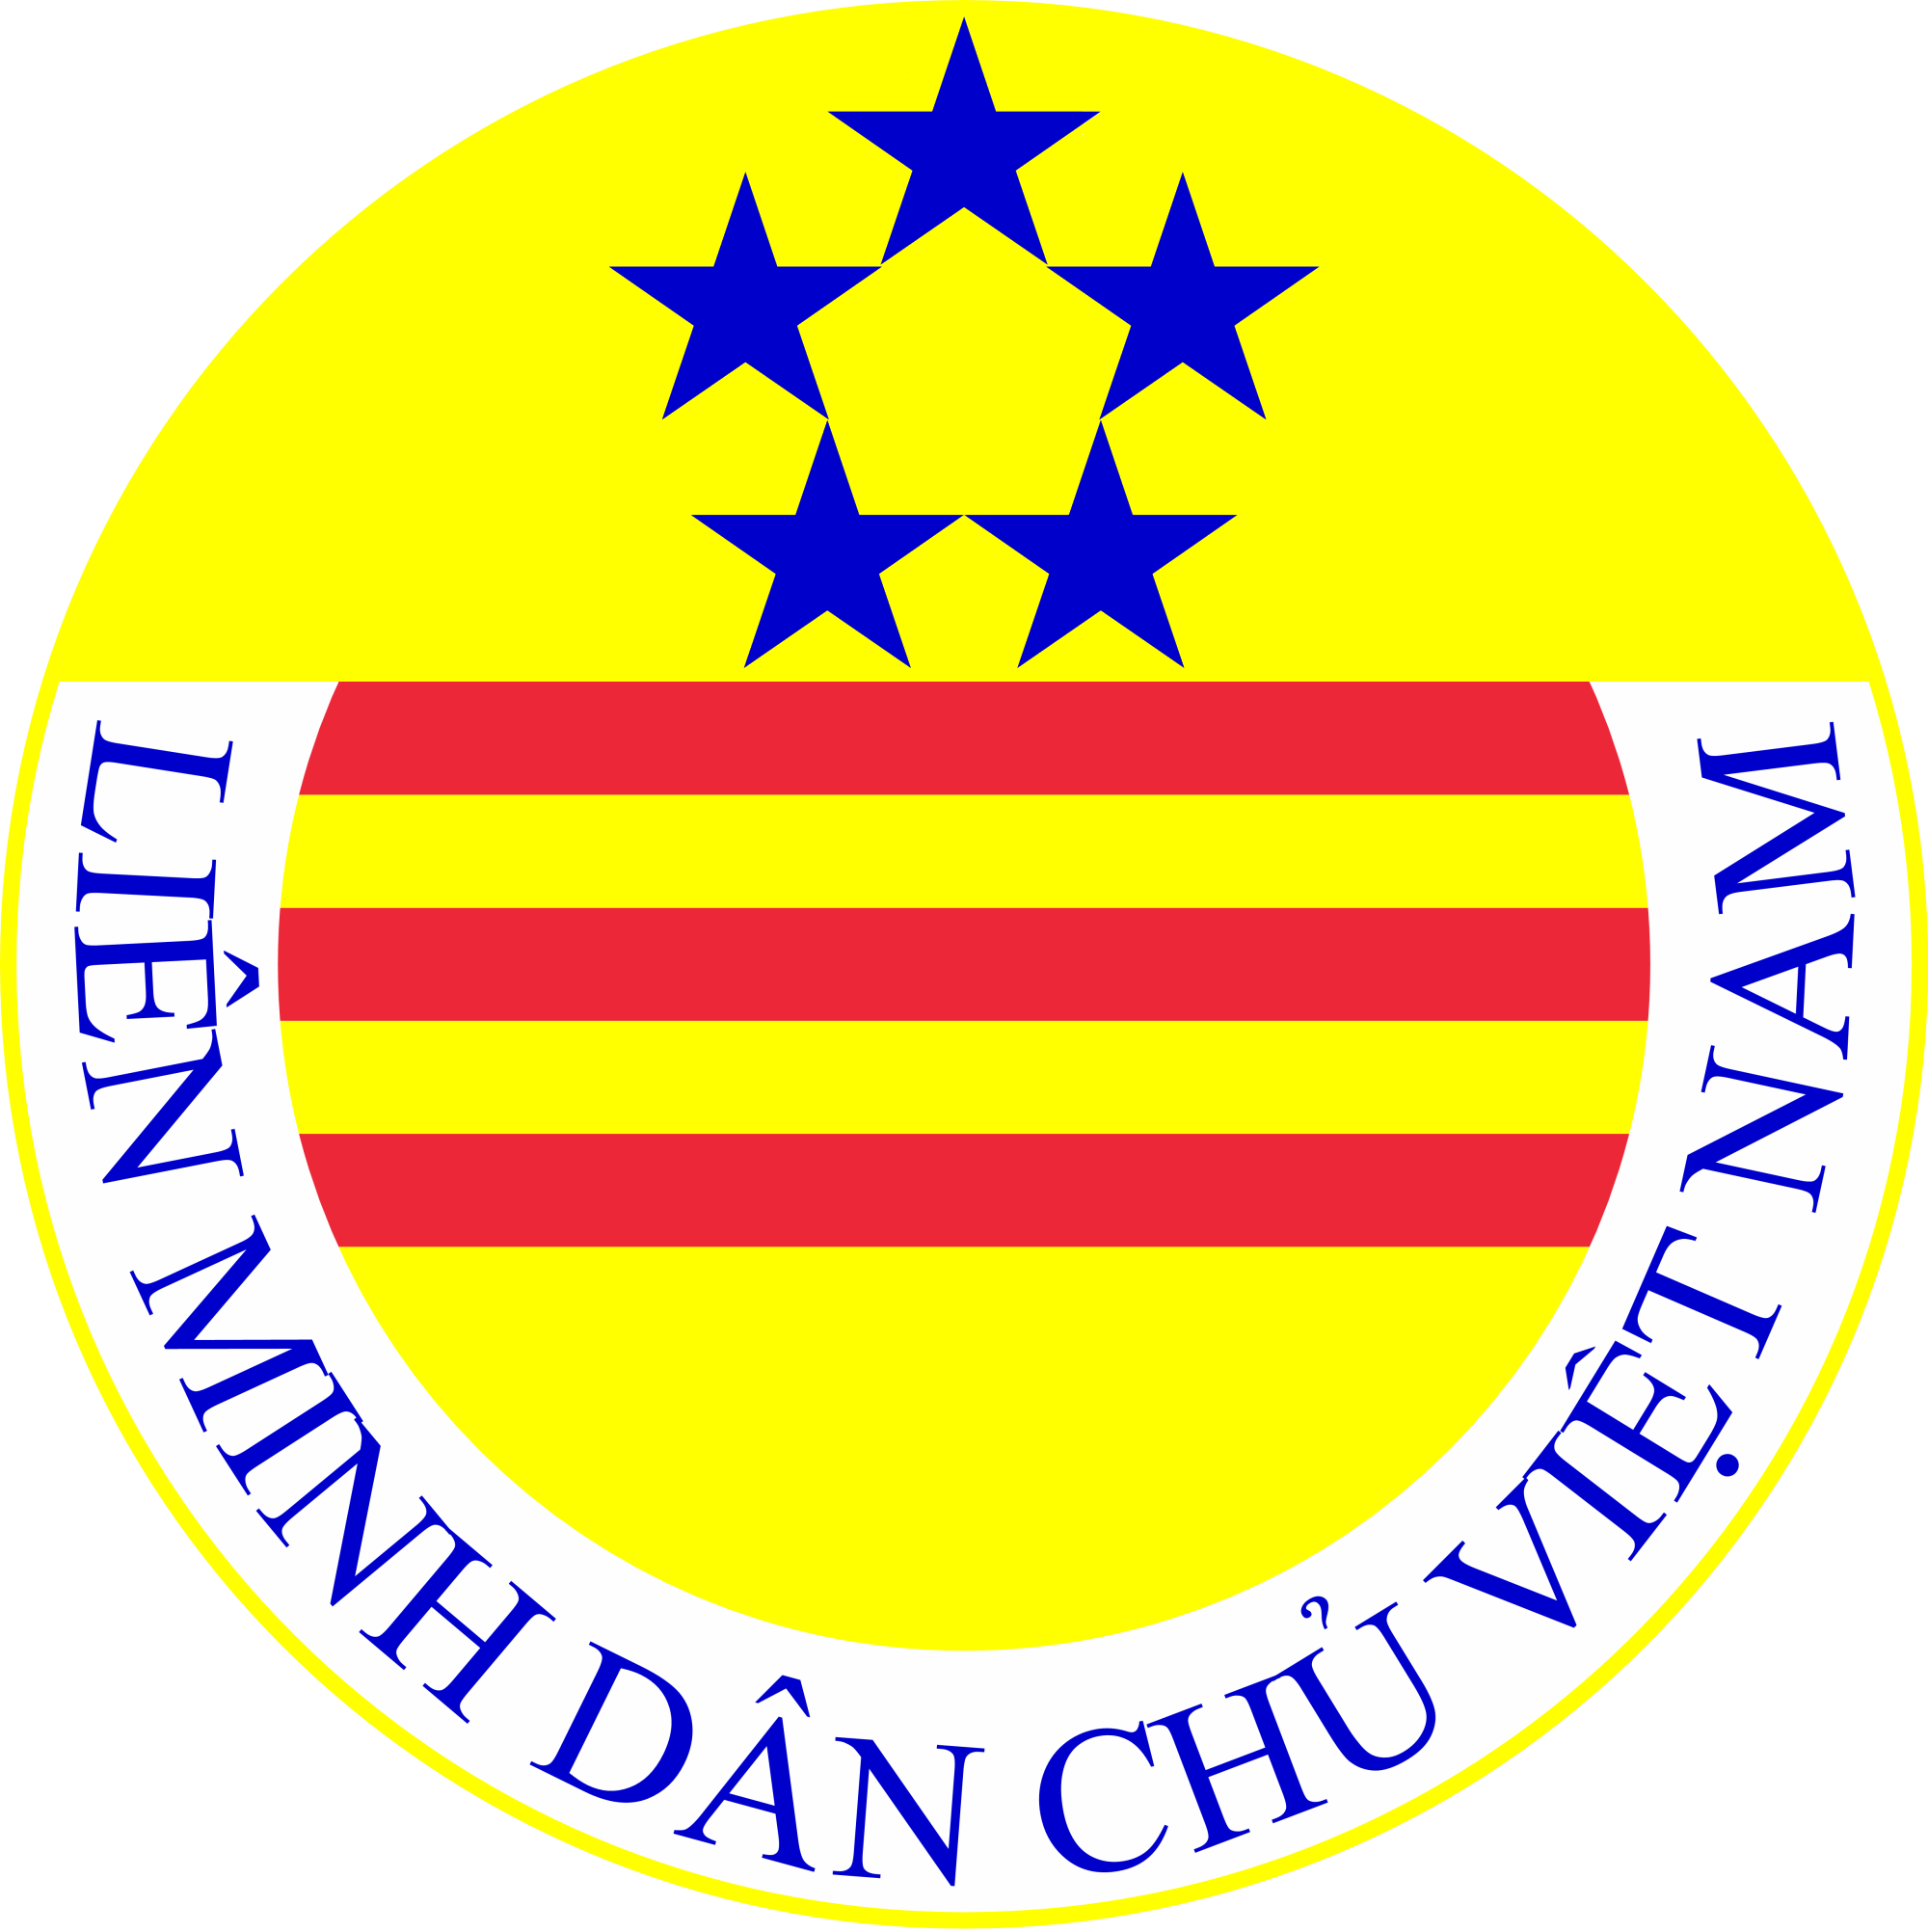 Alliance For Democracy In Vietnam Logo - 5 Star General Rank (2000x2004)